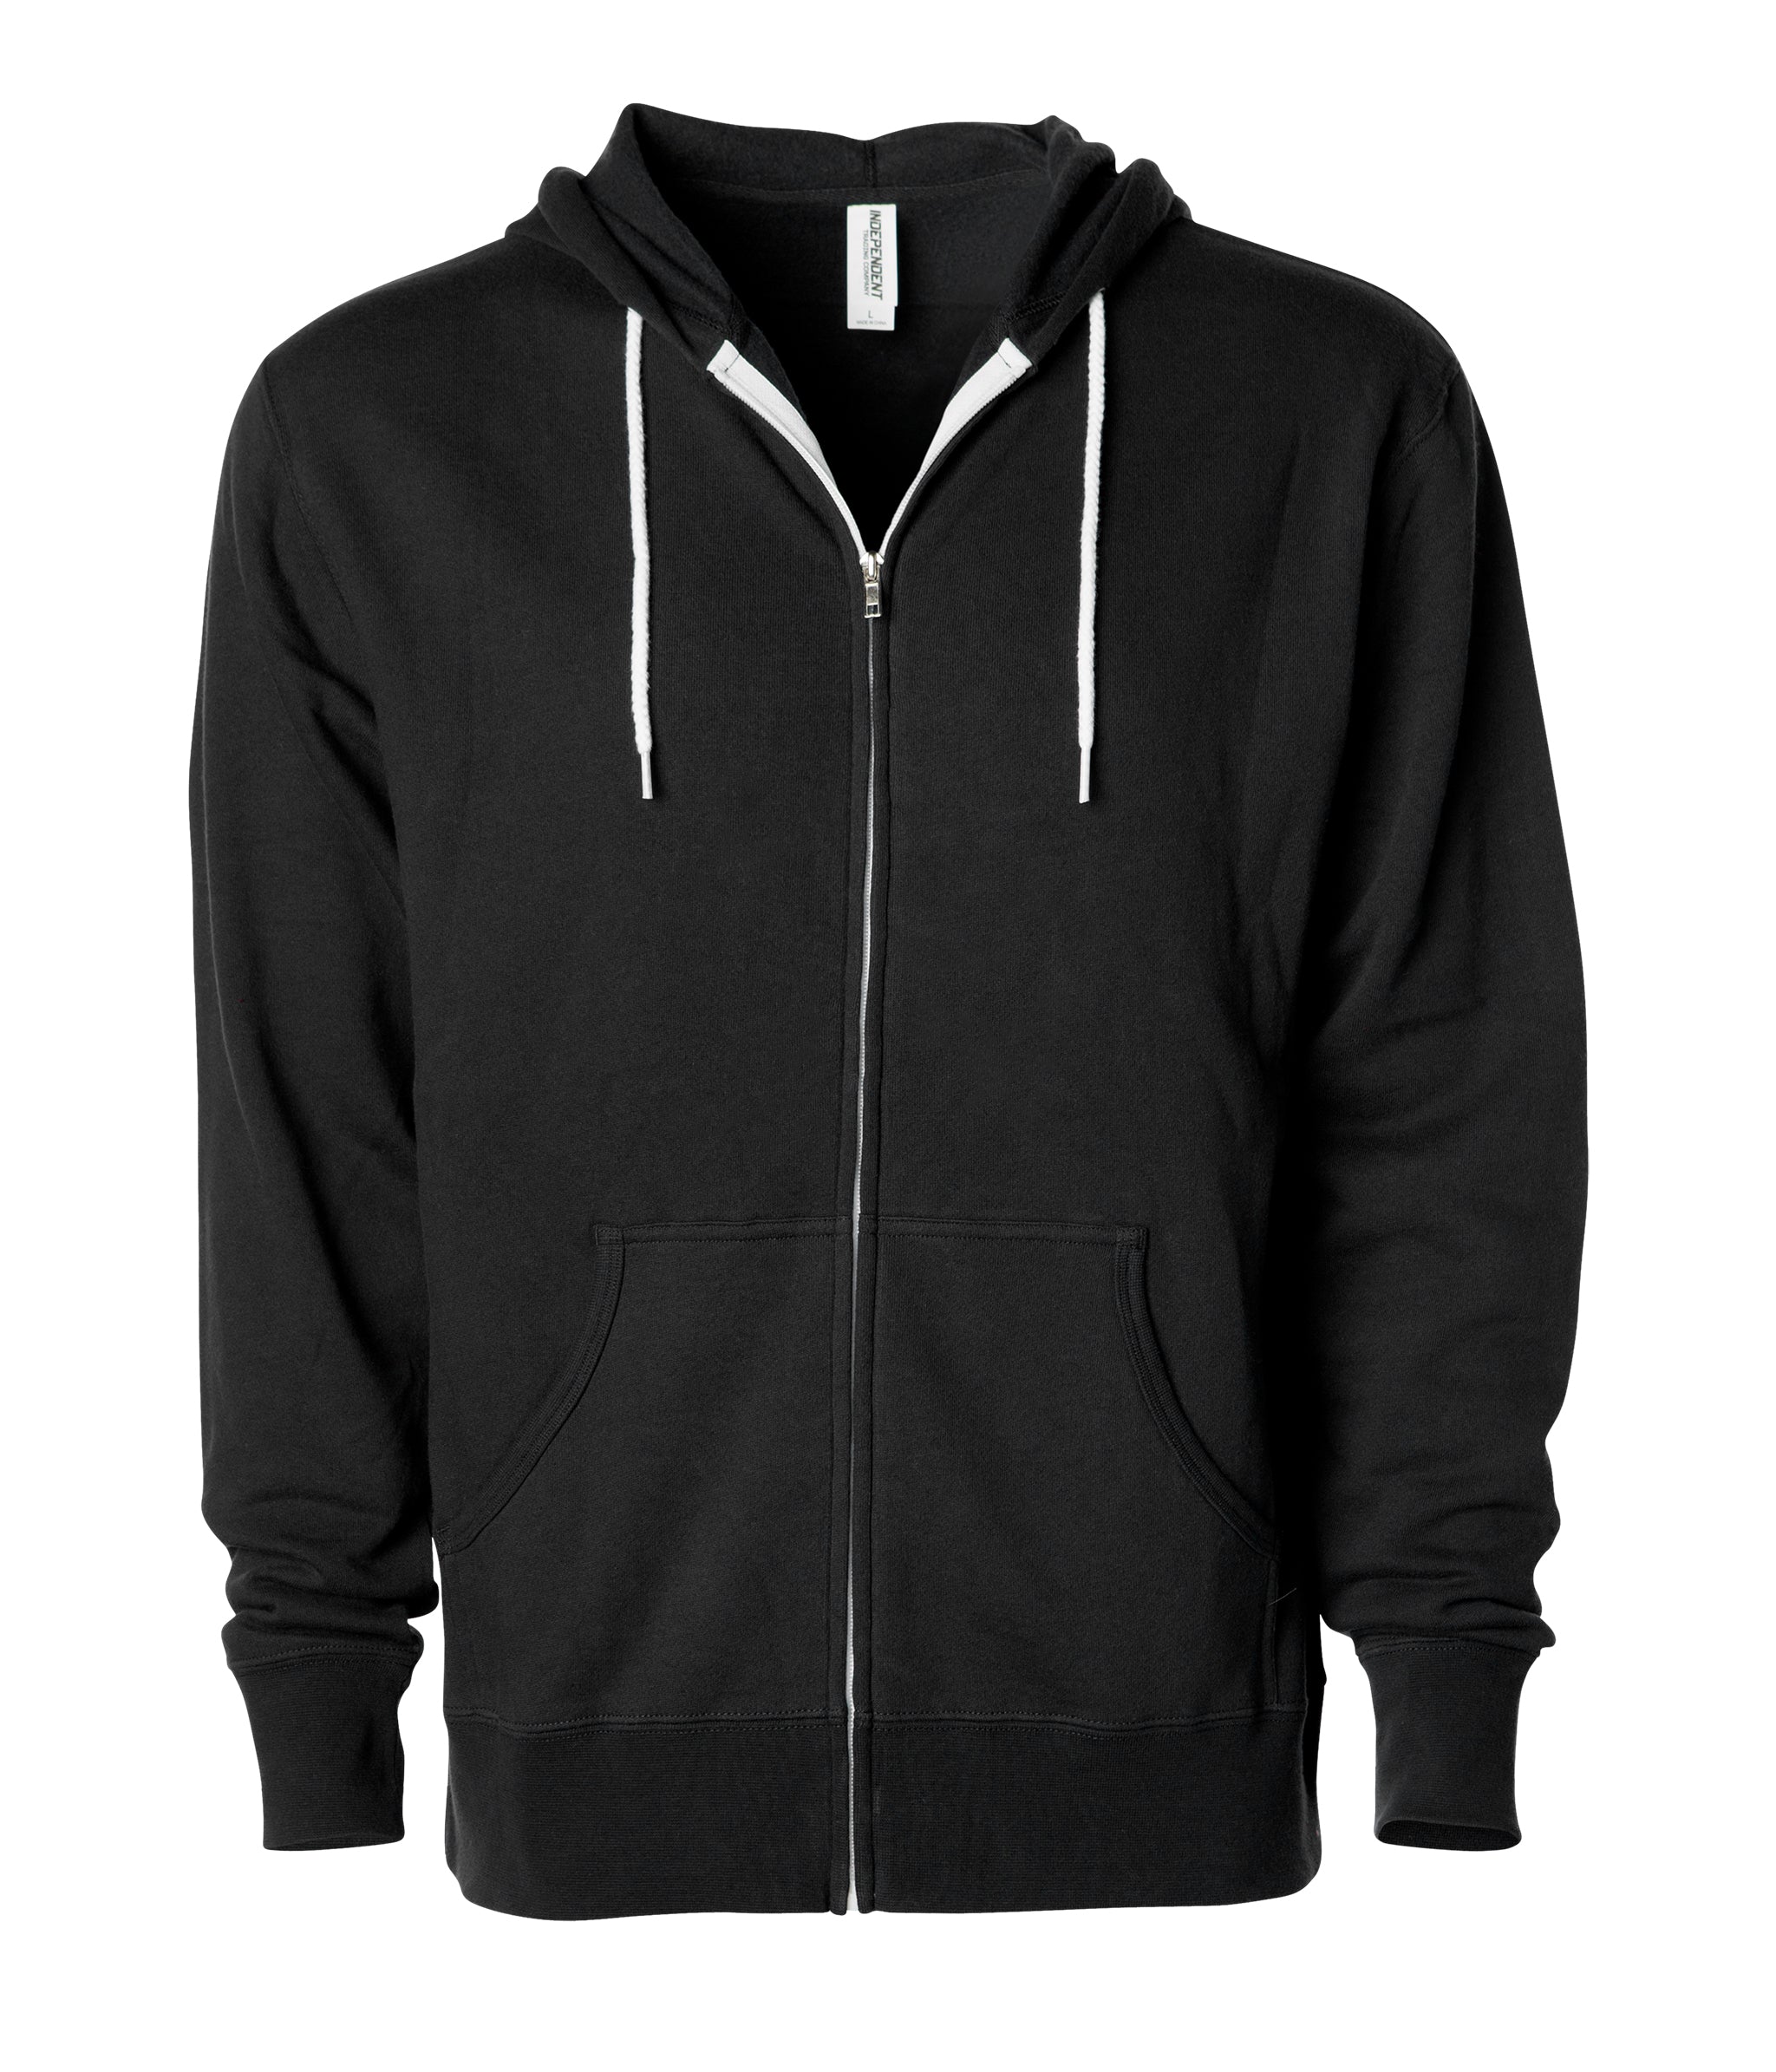 Unisex Lightweight Fitted Zip Hooded Sweatshirt, Black / SM